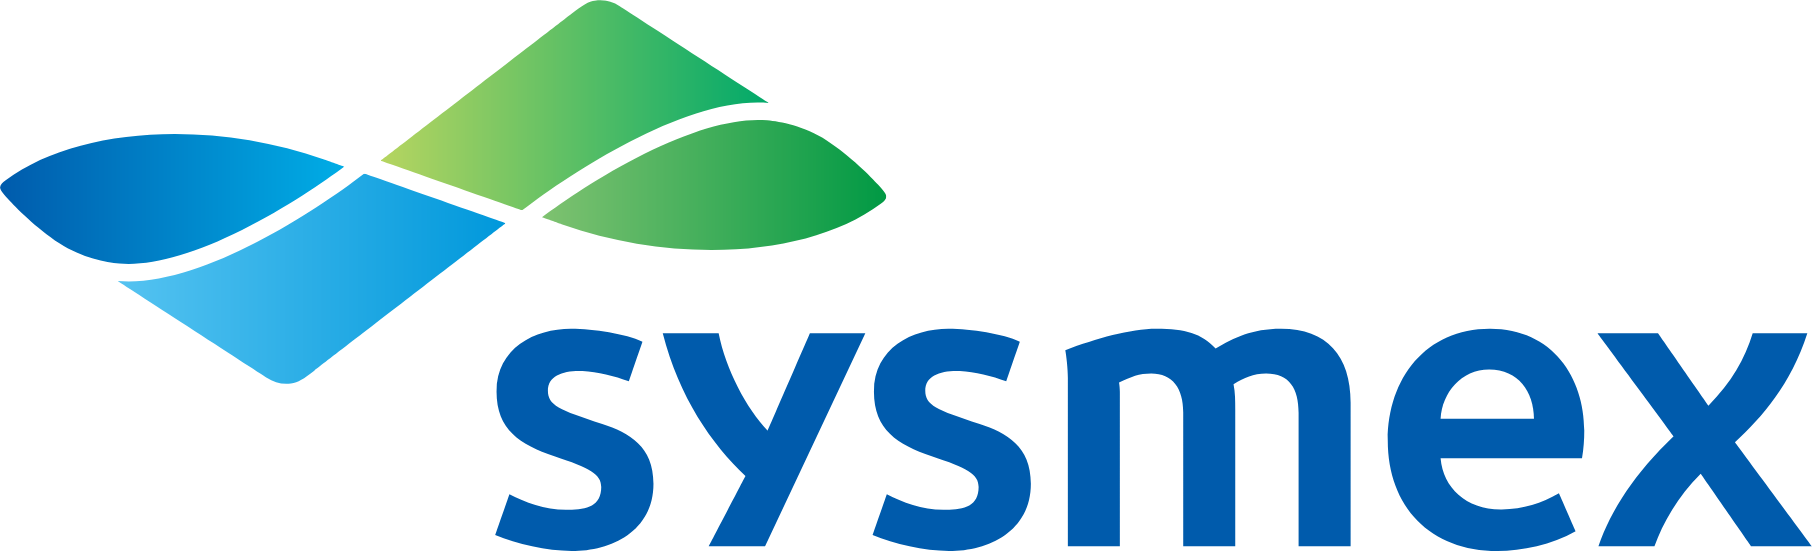 Sysmex logo large (transparent PNG)